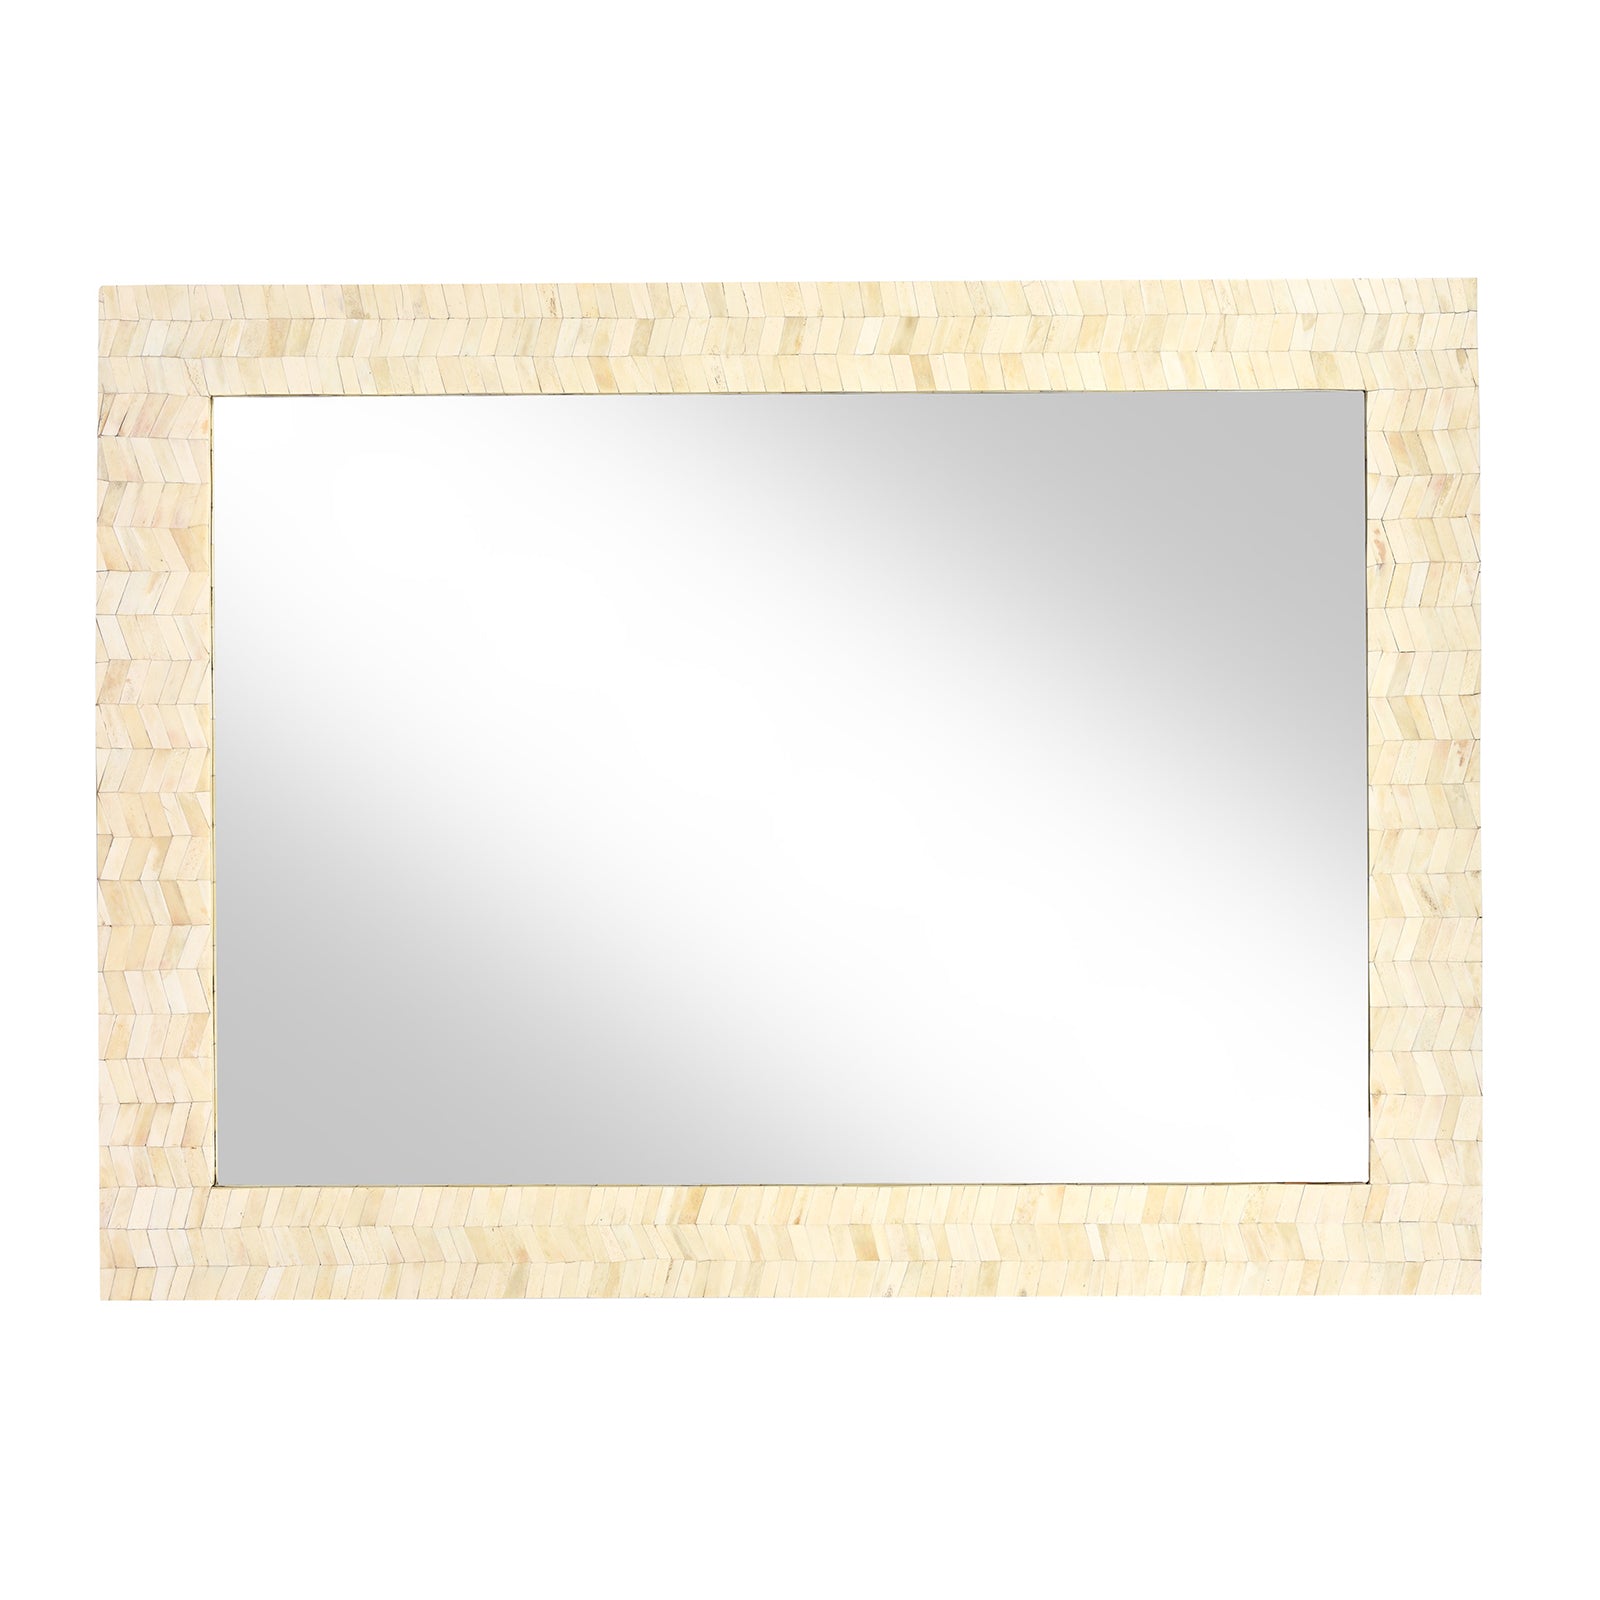 Camel Bone Inlaid Mirror Frame from Rajasthan | INDIGO ANTIQUES